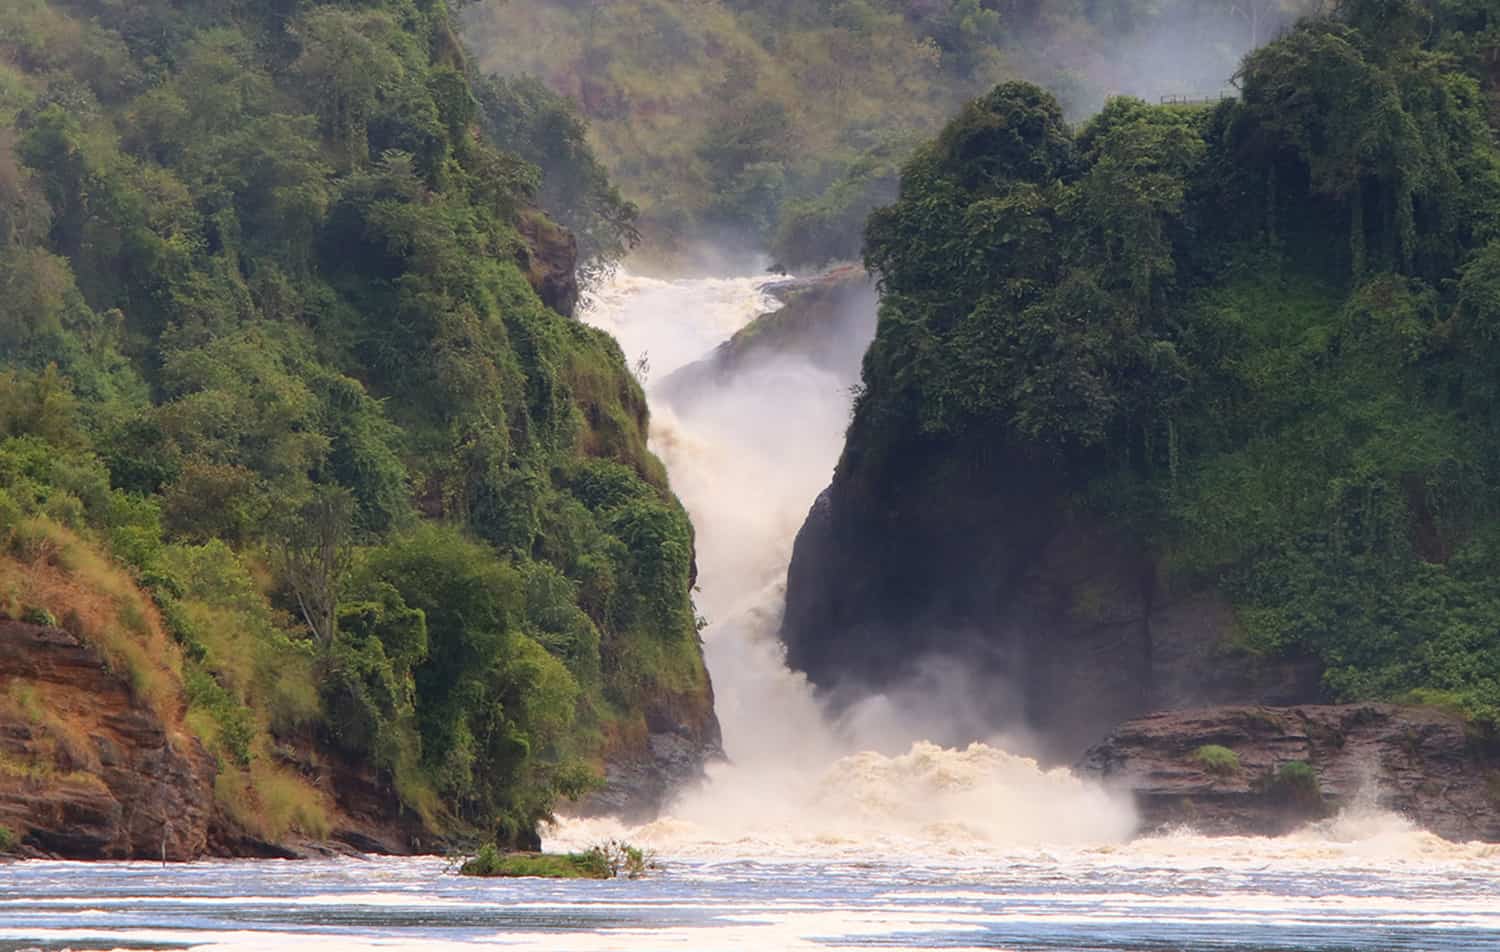 Murchison Falls 